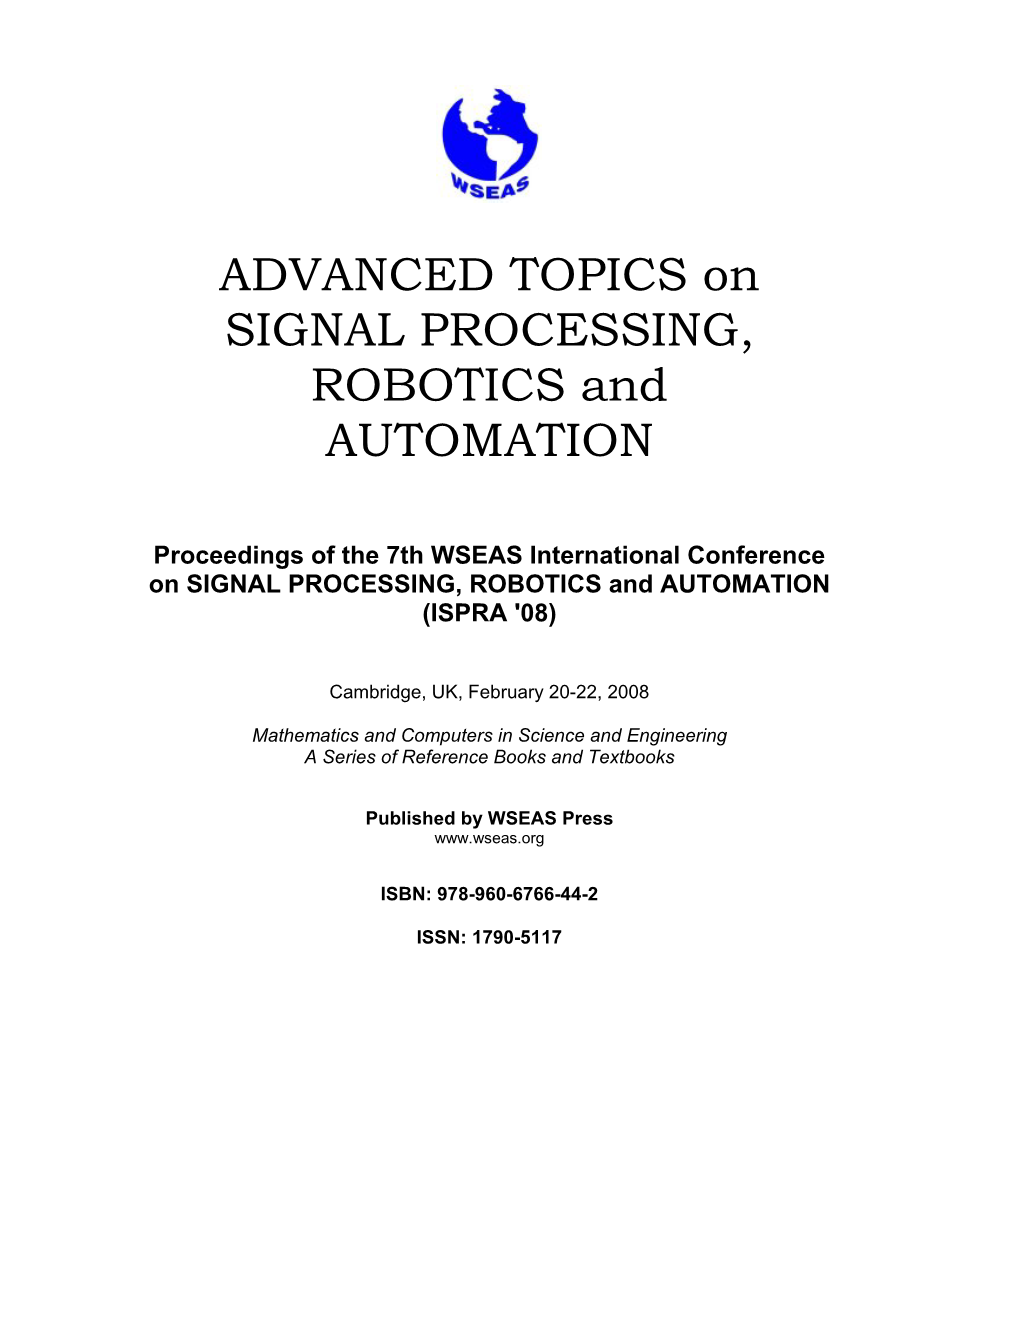 ADVANCED TOPICS on SIGNAL PROCESSING, ROBOTICS and AUTOMATION